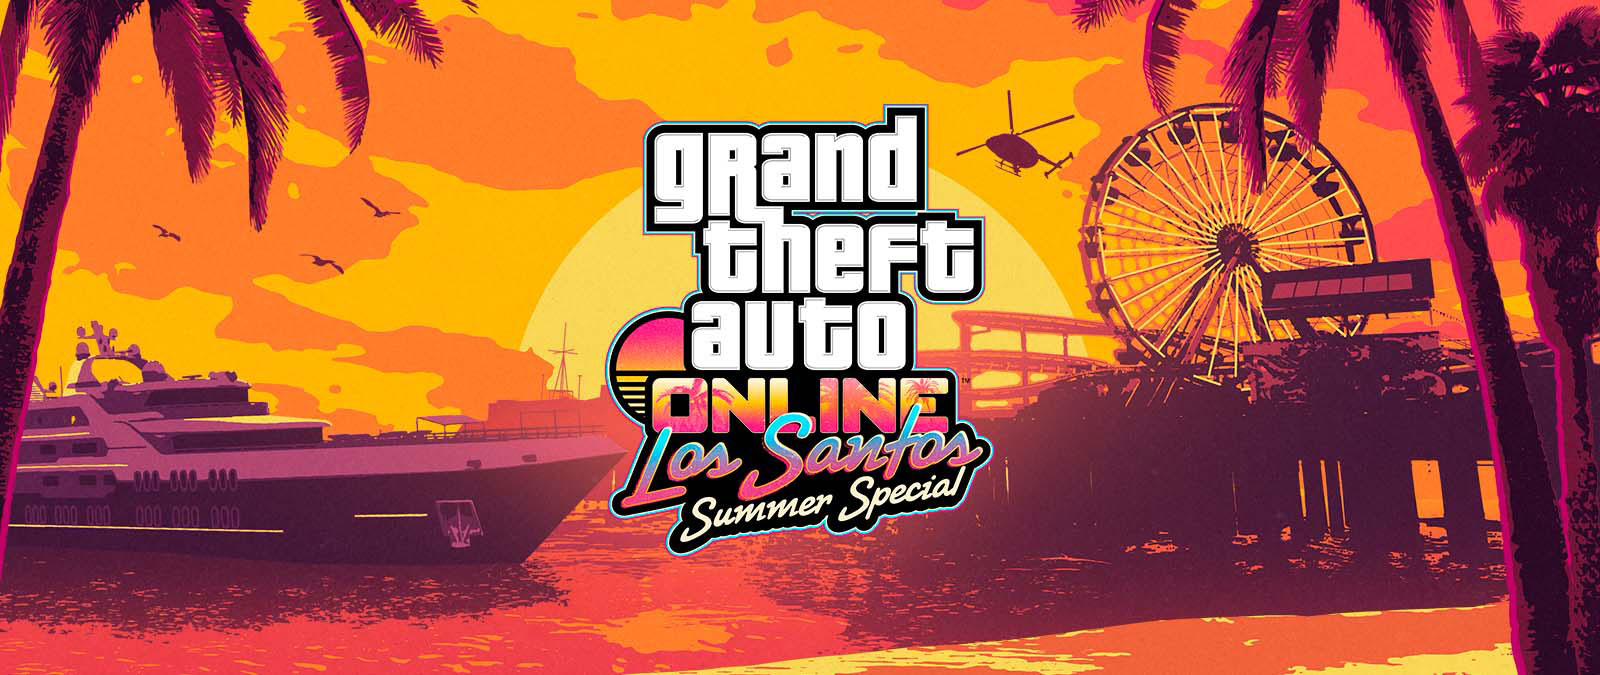 Grand Theft Auto OnlineLos Santos Summer Special.日落時分遊艇、摩天輪和直升機